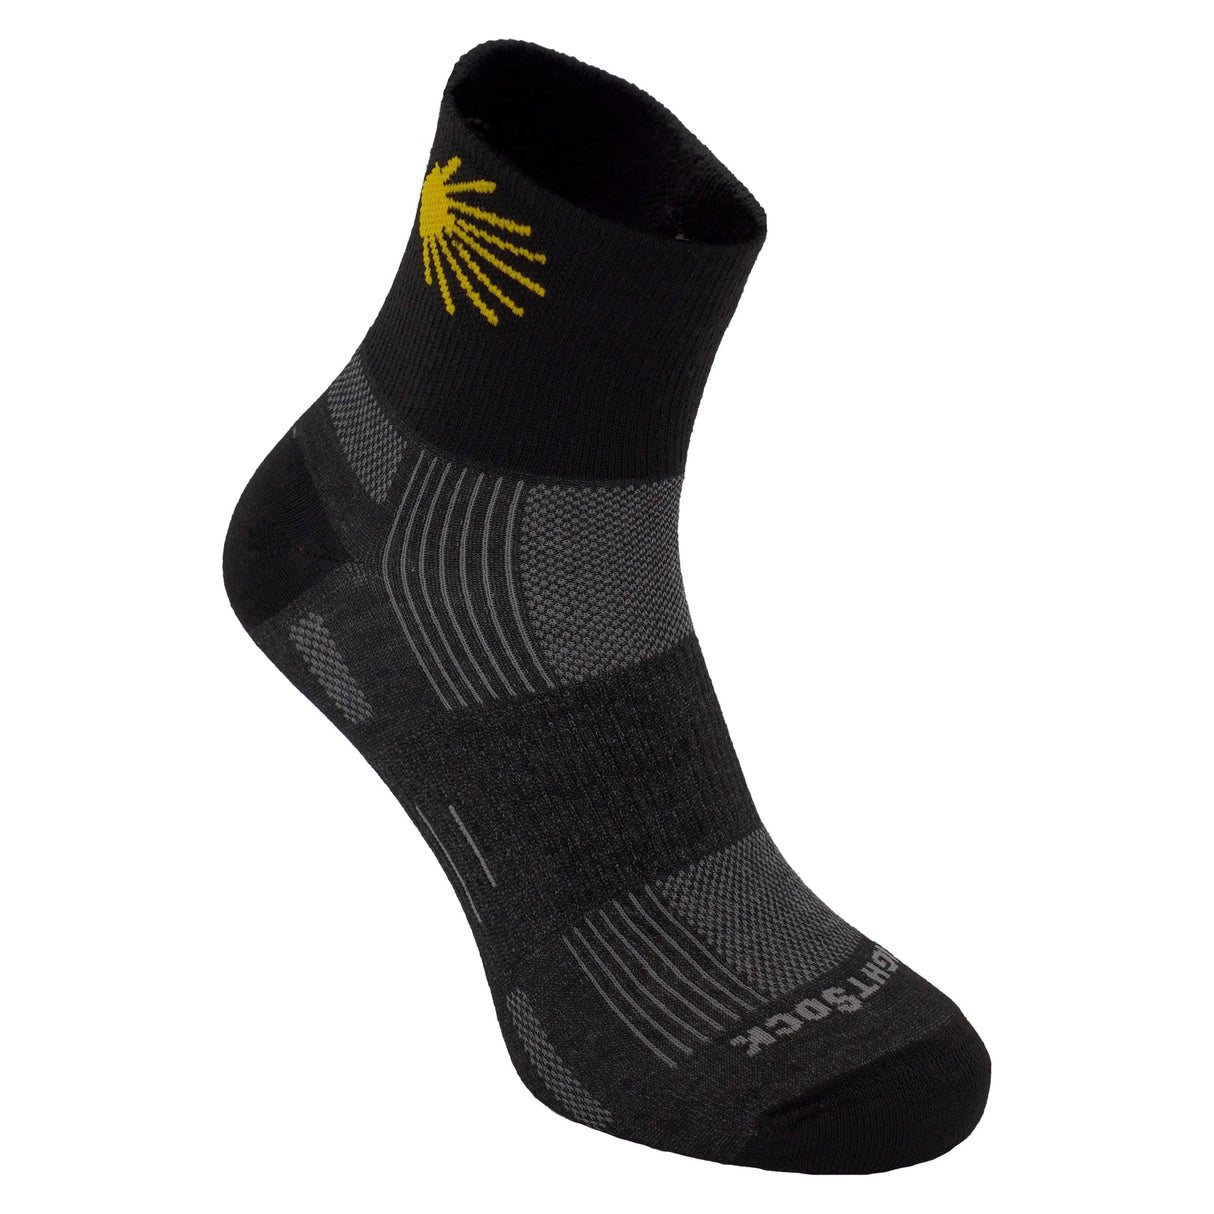 Wrightsock Double-Layer ECO Explore Quarter Socks  -  Medium / Black w/ Camino Shell Logo